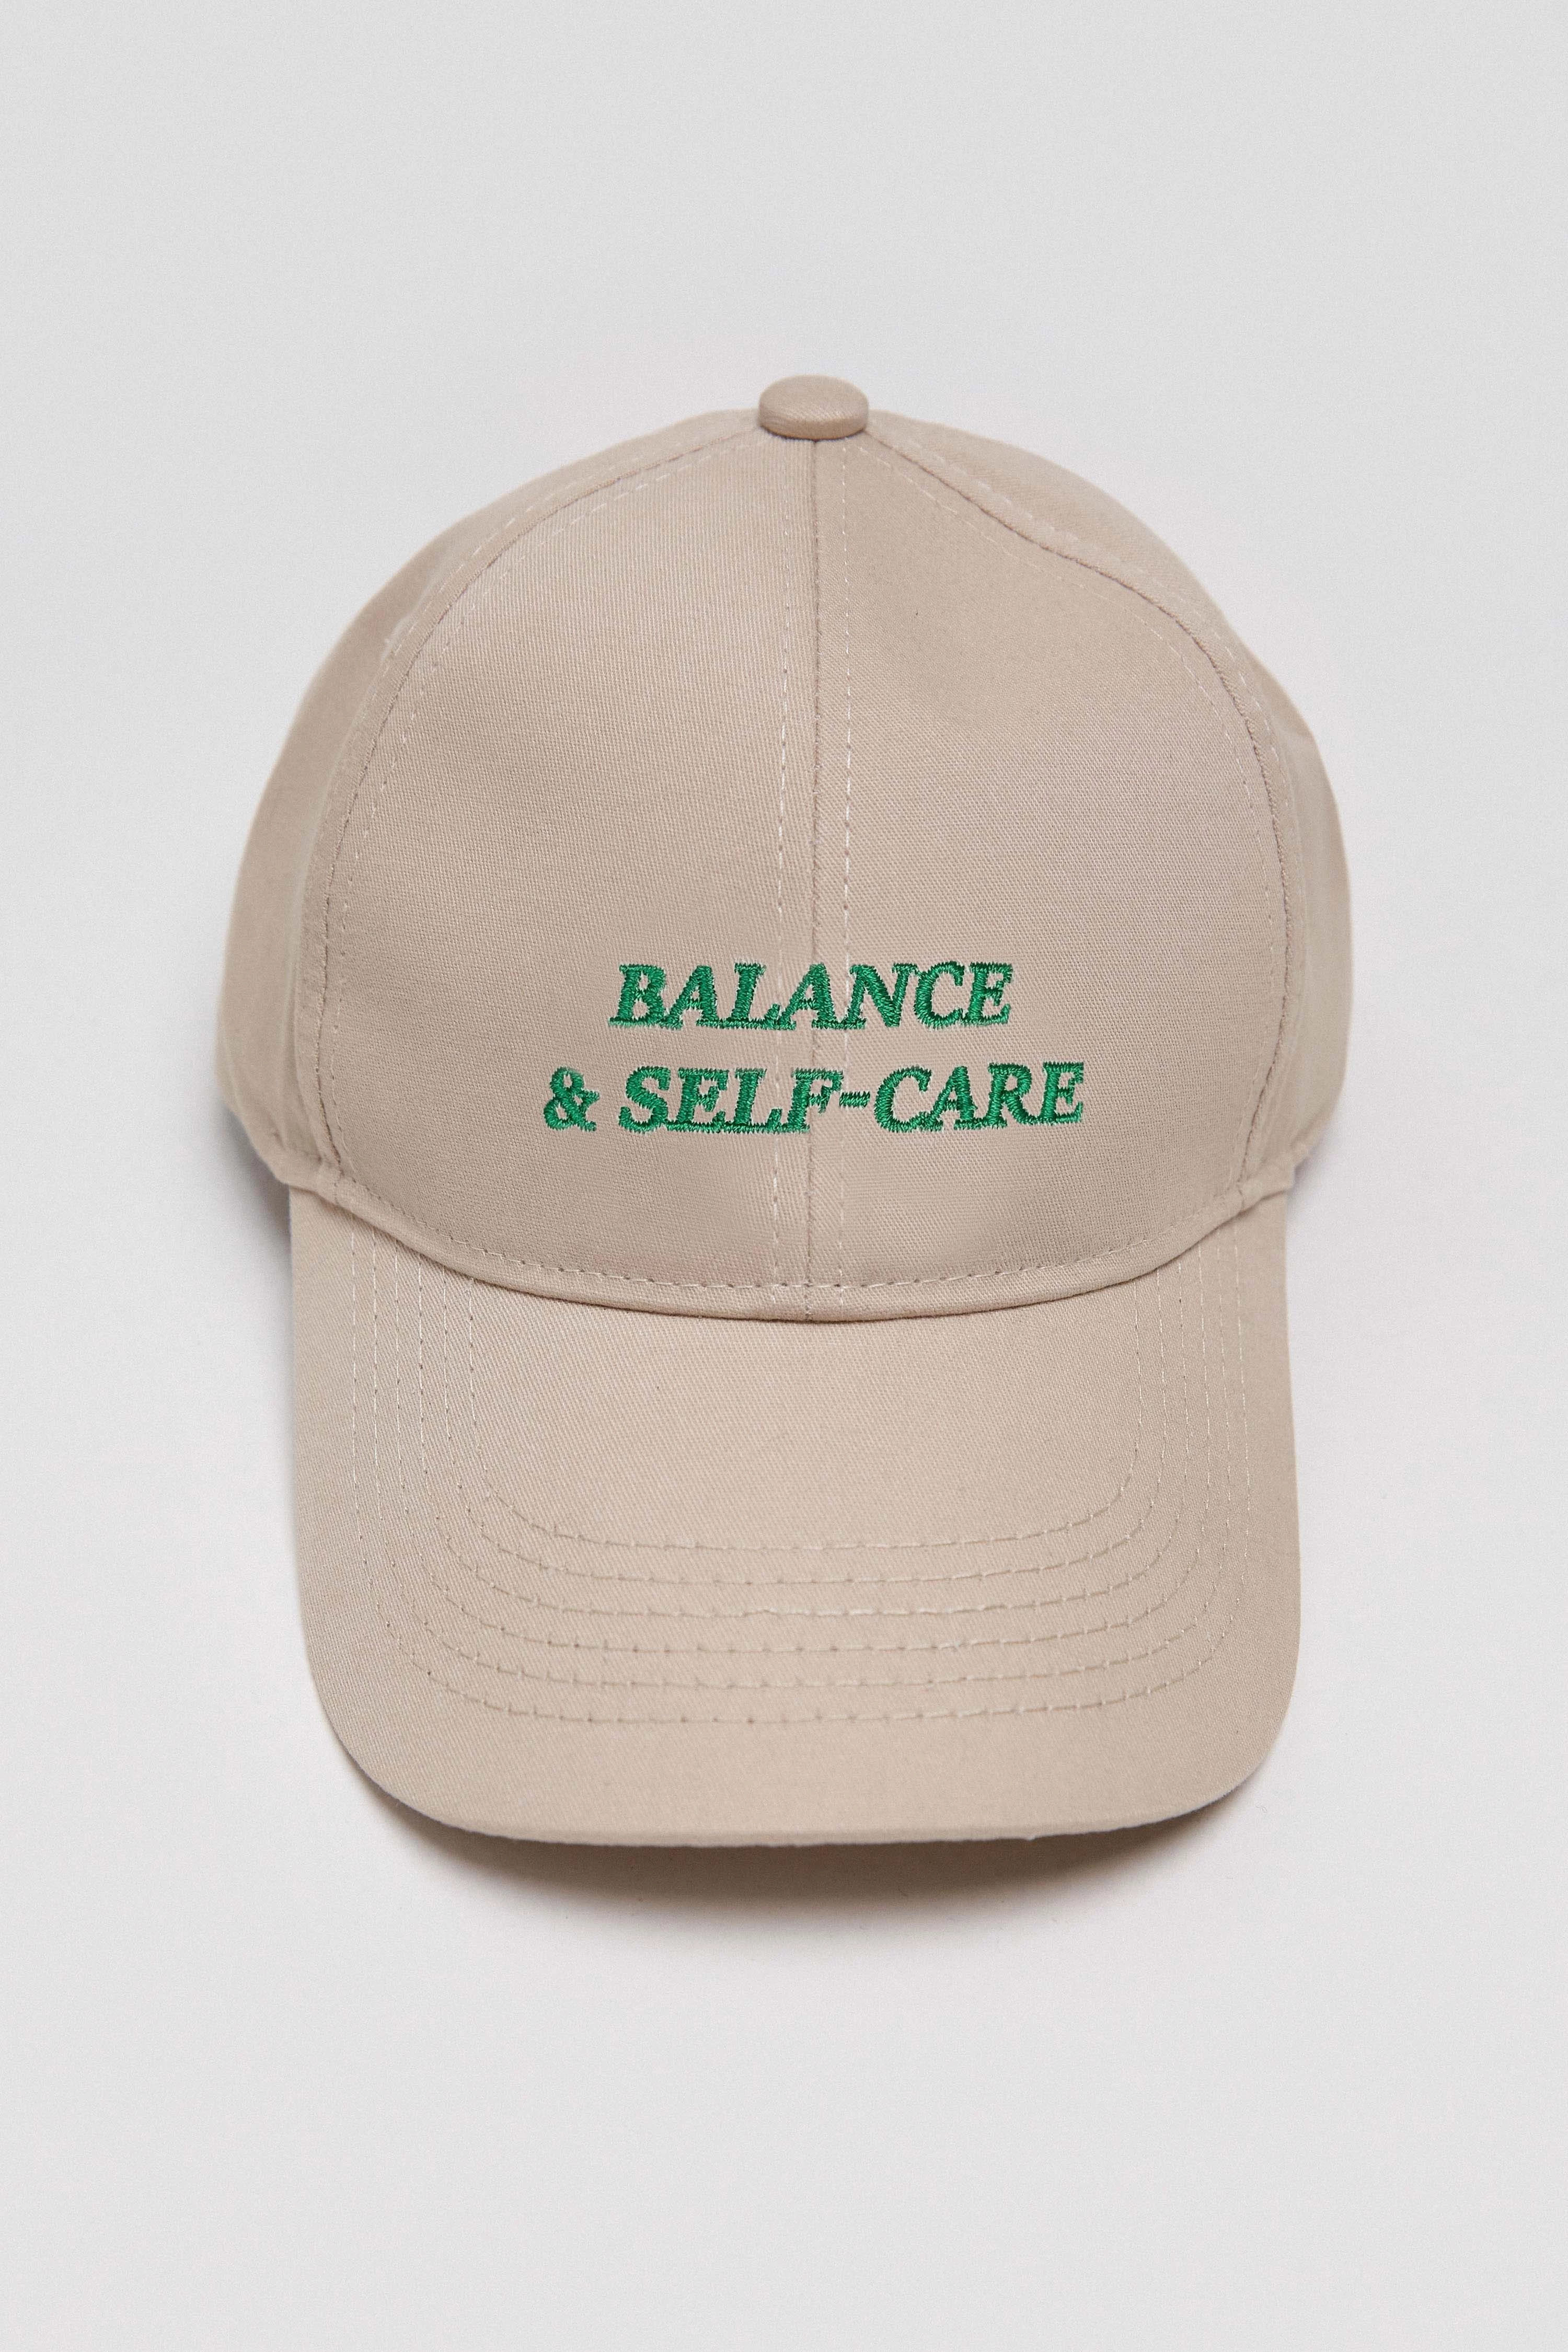 Beige baseball cap "Balance & self-care", photo 1